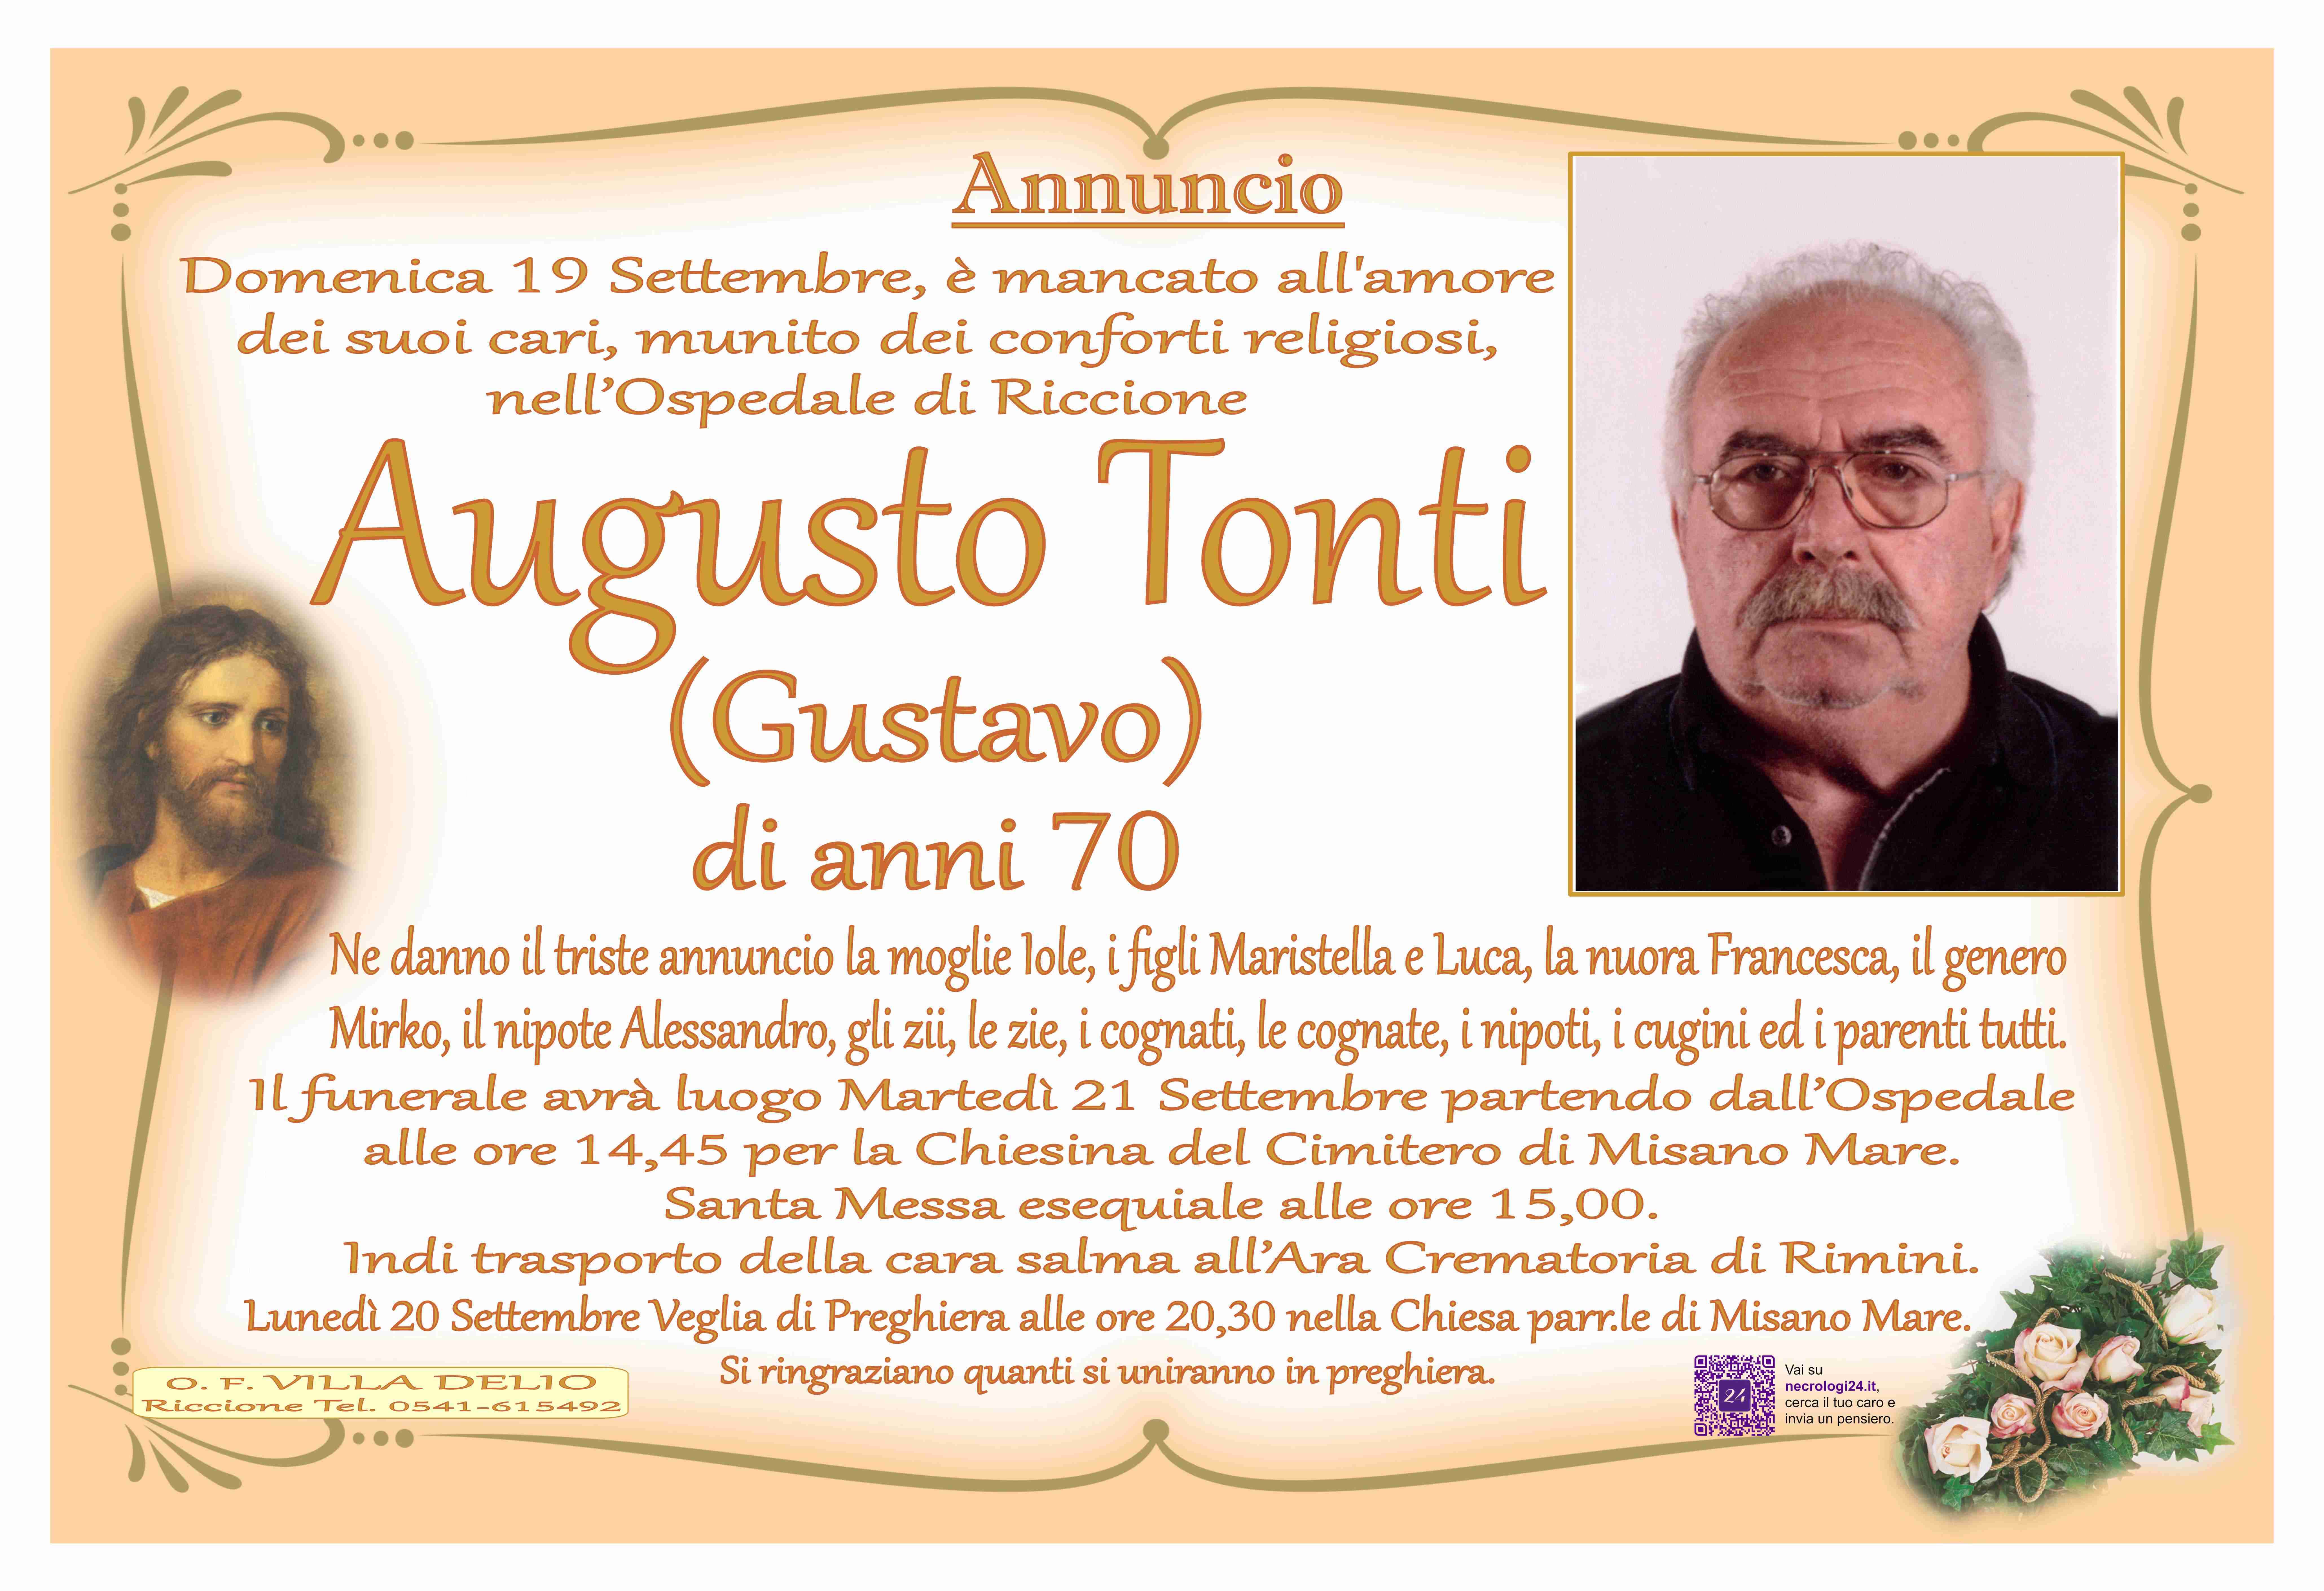 Augusto (Gustavo) Tonti